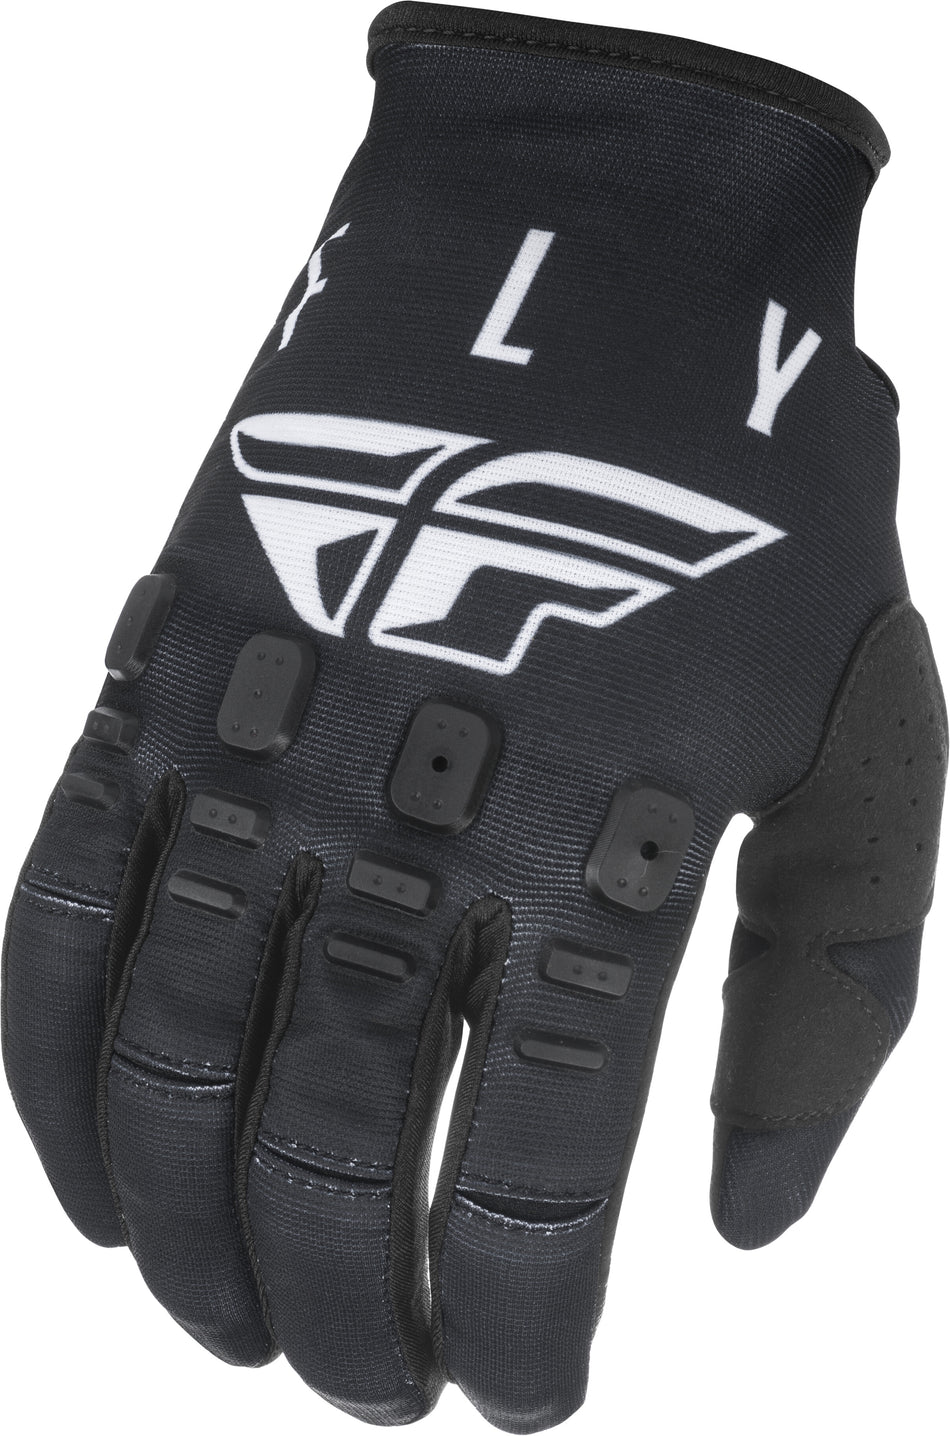 FLY RACING Kinetic K121 Gloves Black/White Sz 10 374-41010